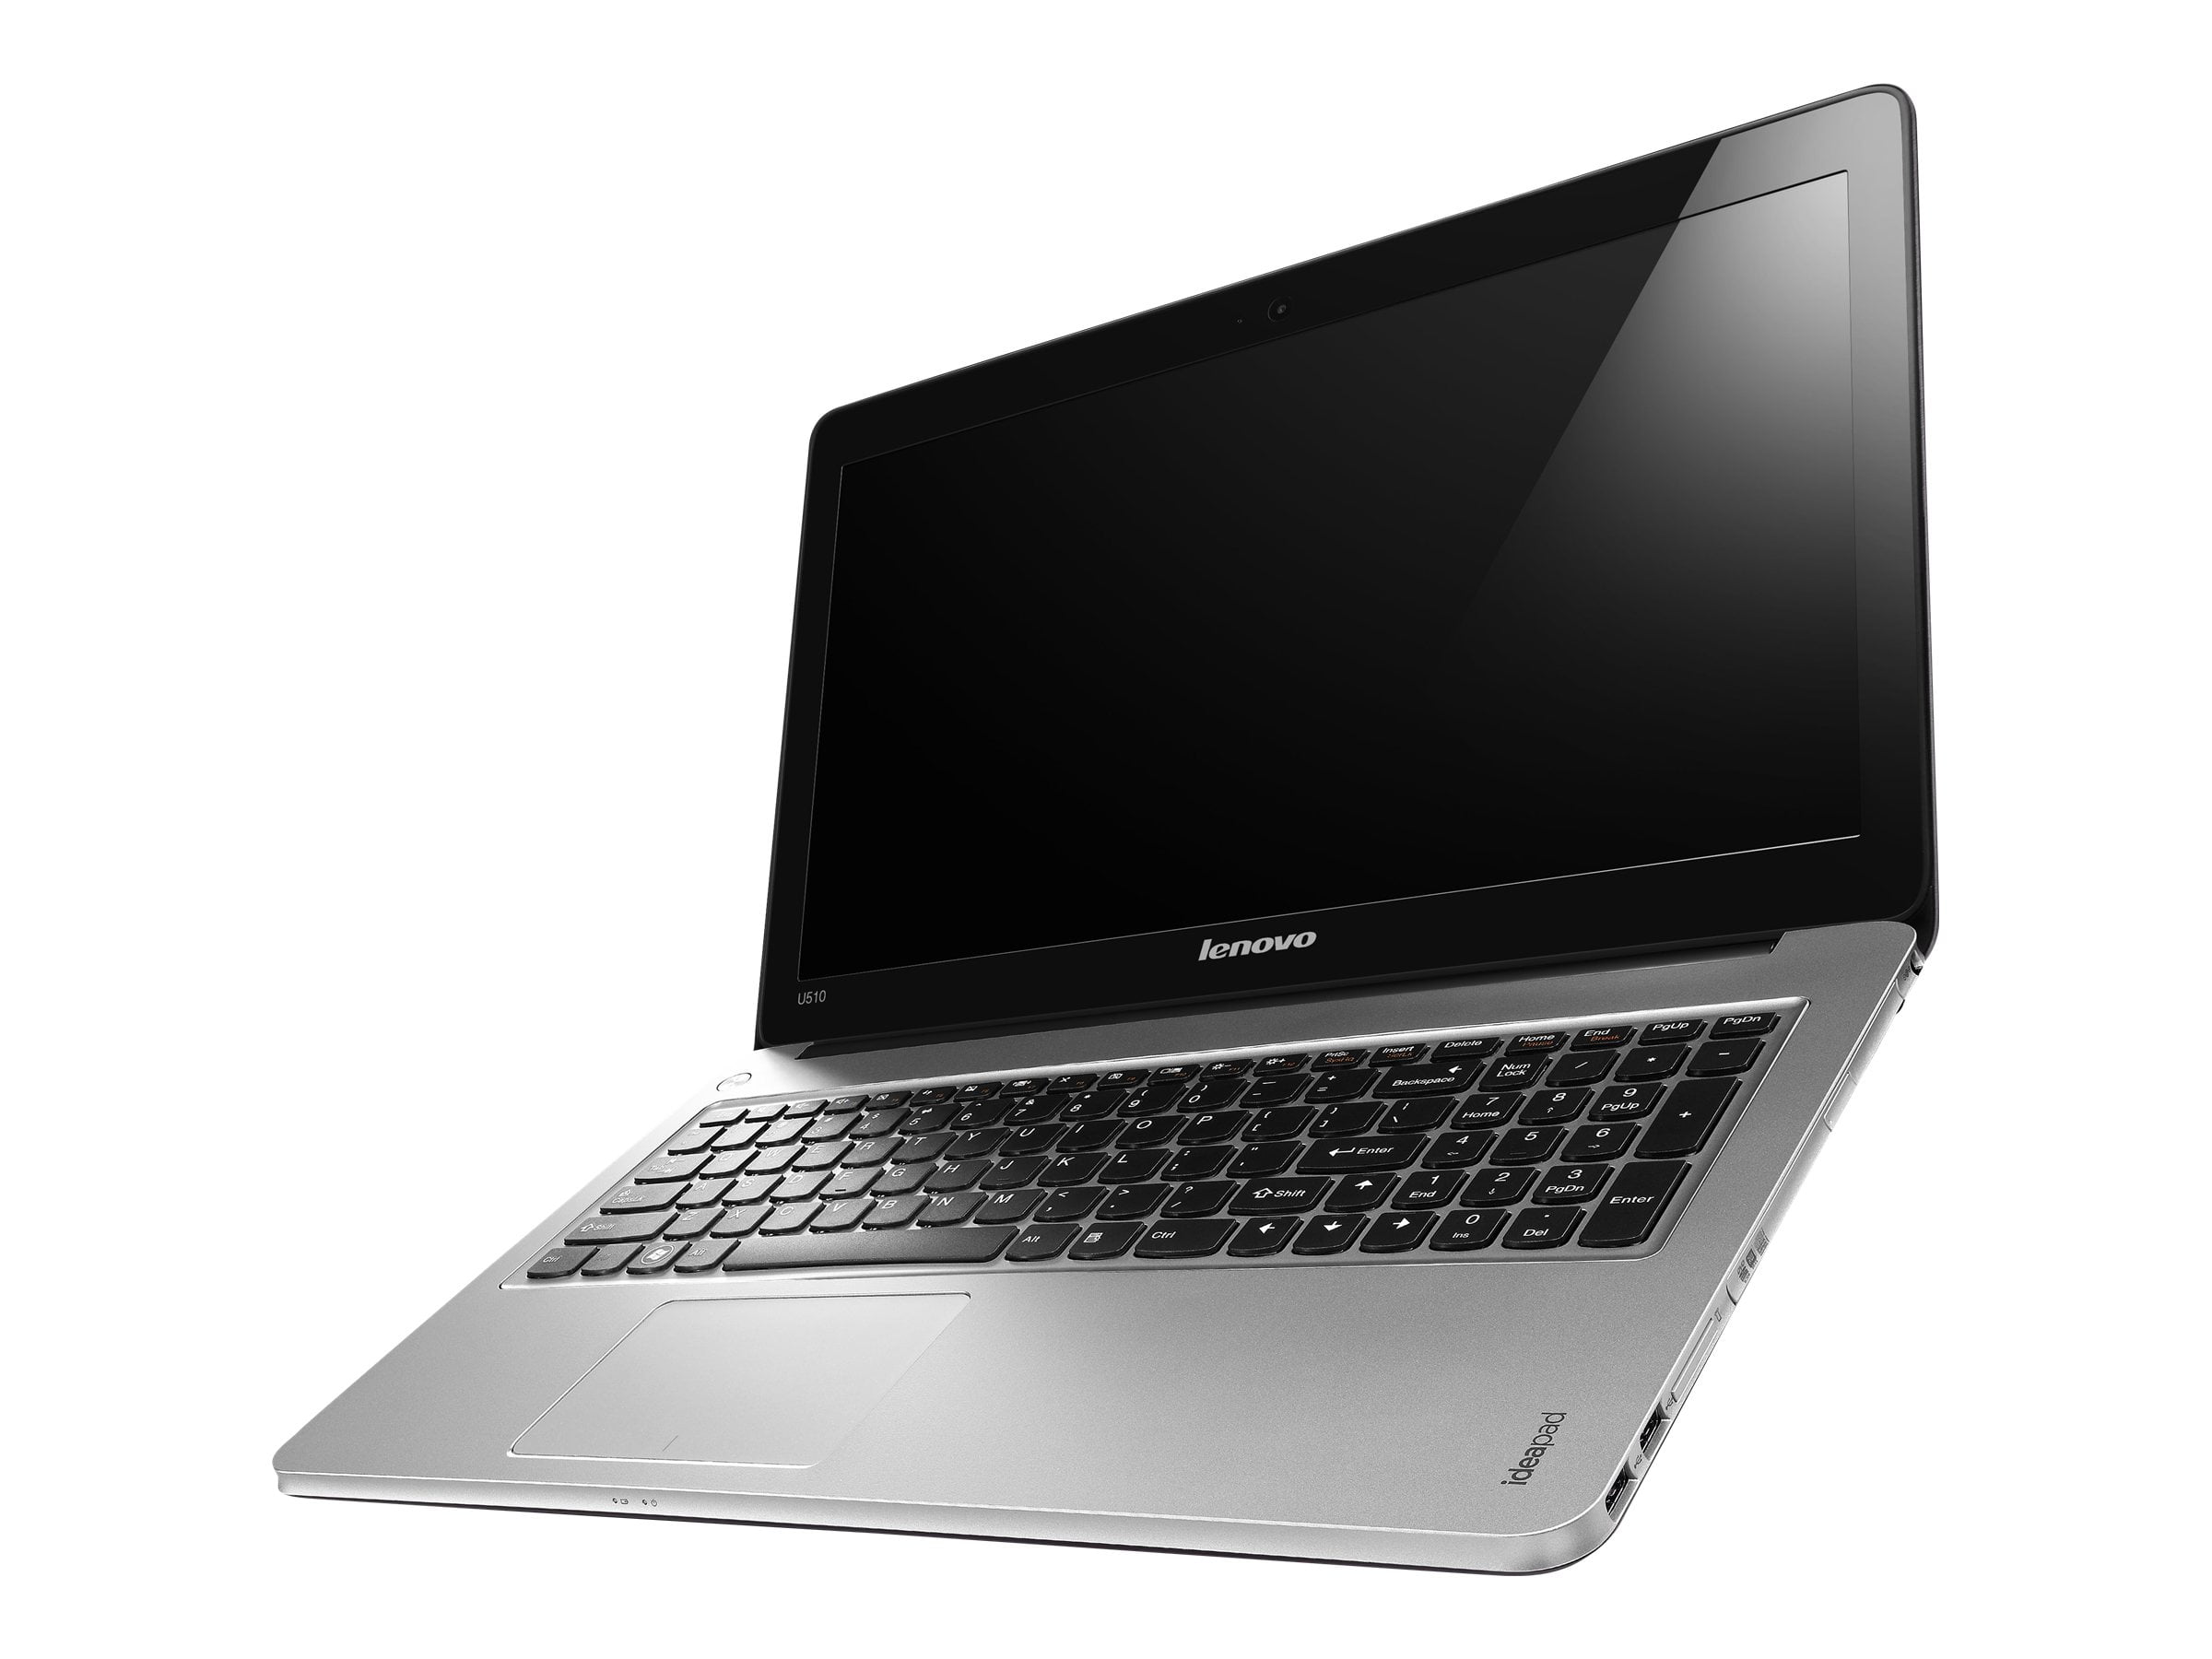 Lenovo U510 - Ultrabook - Core i5 3317U / 1.7 - Win 64-bit - HD Graphics 4000 - 6 GB RAM - 750 GB HDD (24 GB cache) - DVD-Writer - 15.6" VibrantView 1366 x 768 (HD) - graphite gray - Walmart.com